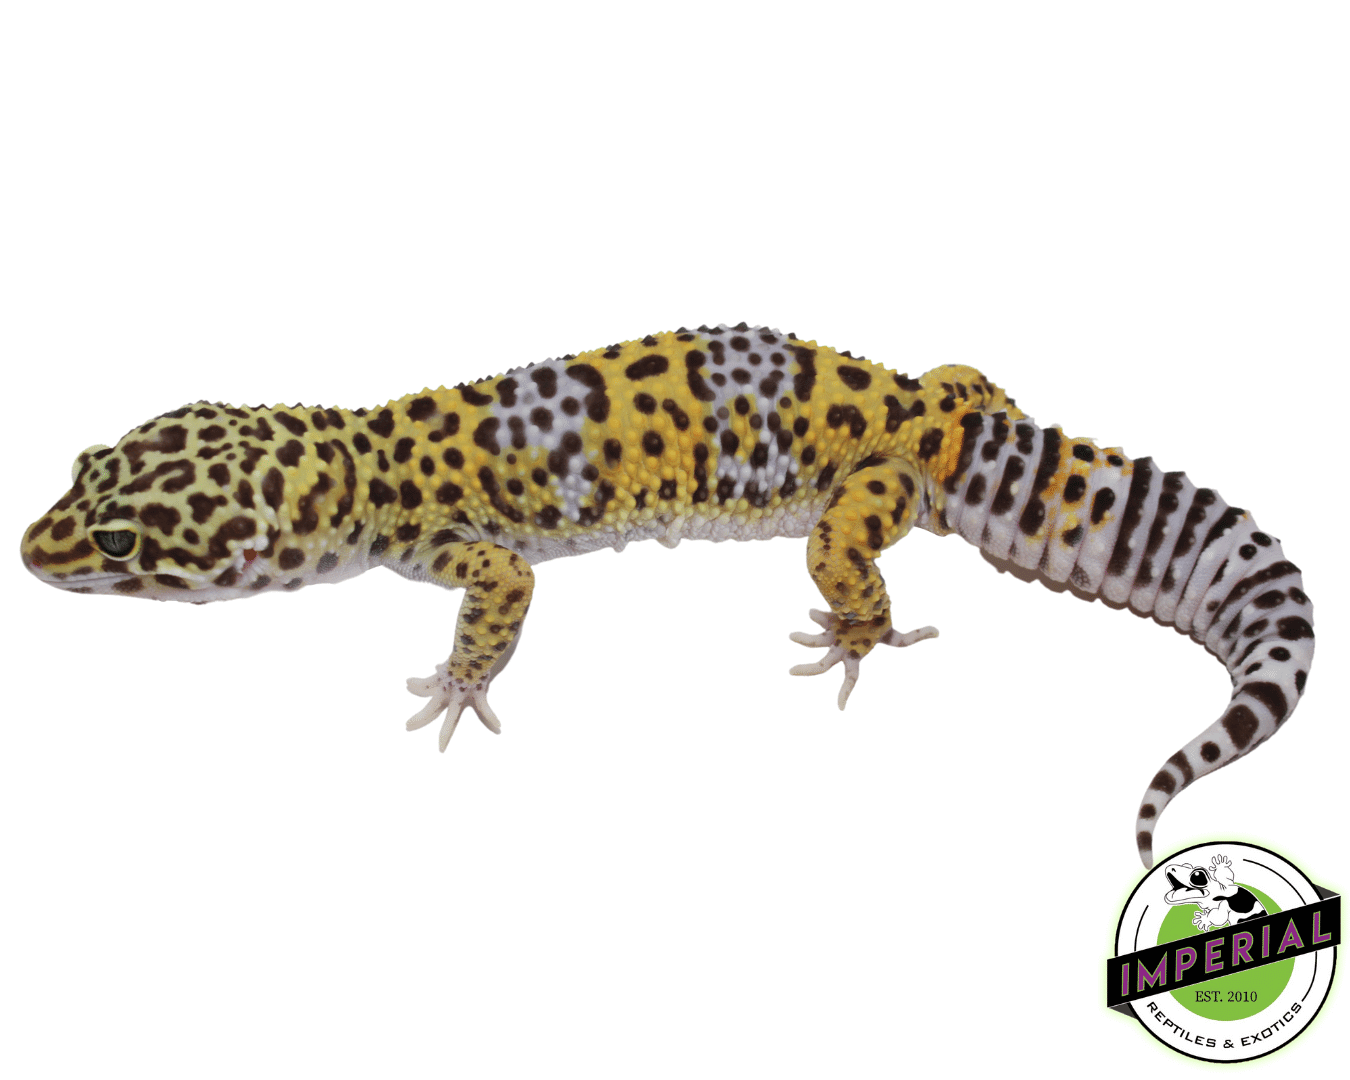 ph rainwater bae leopard gecko for sale, buy reptiles online